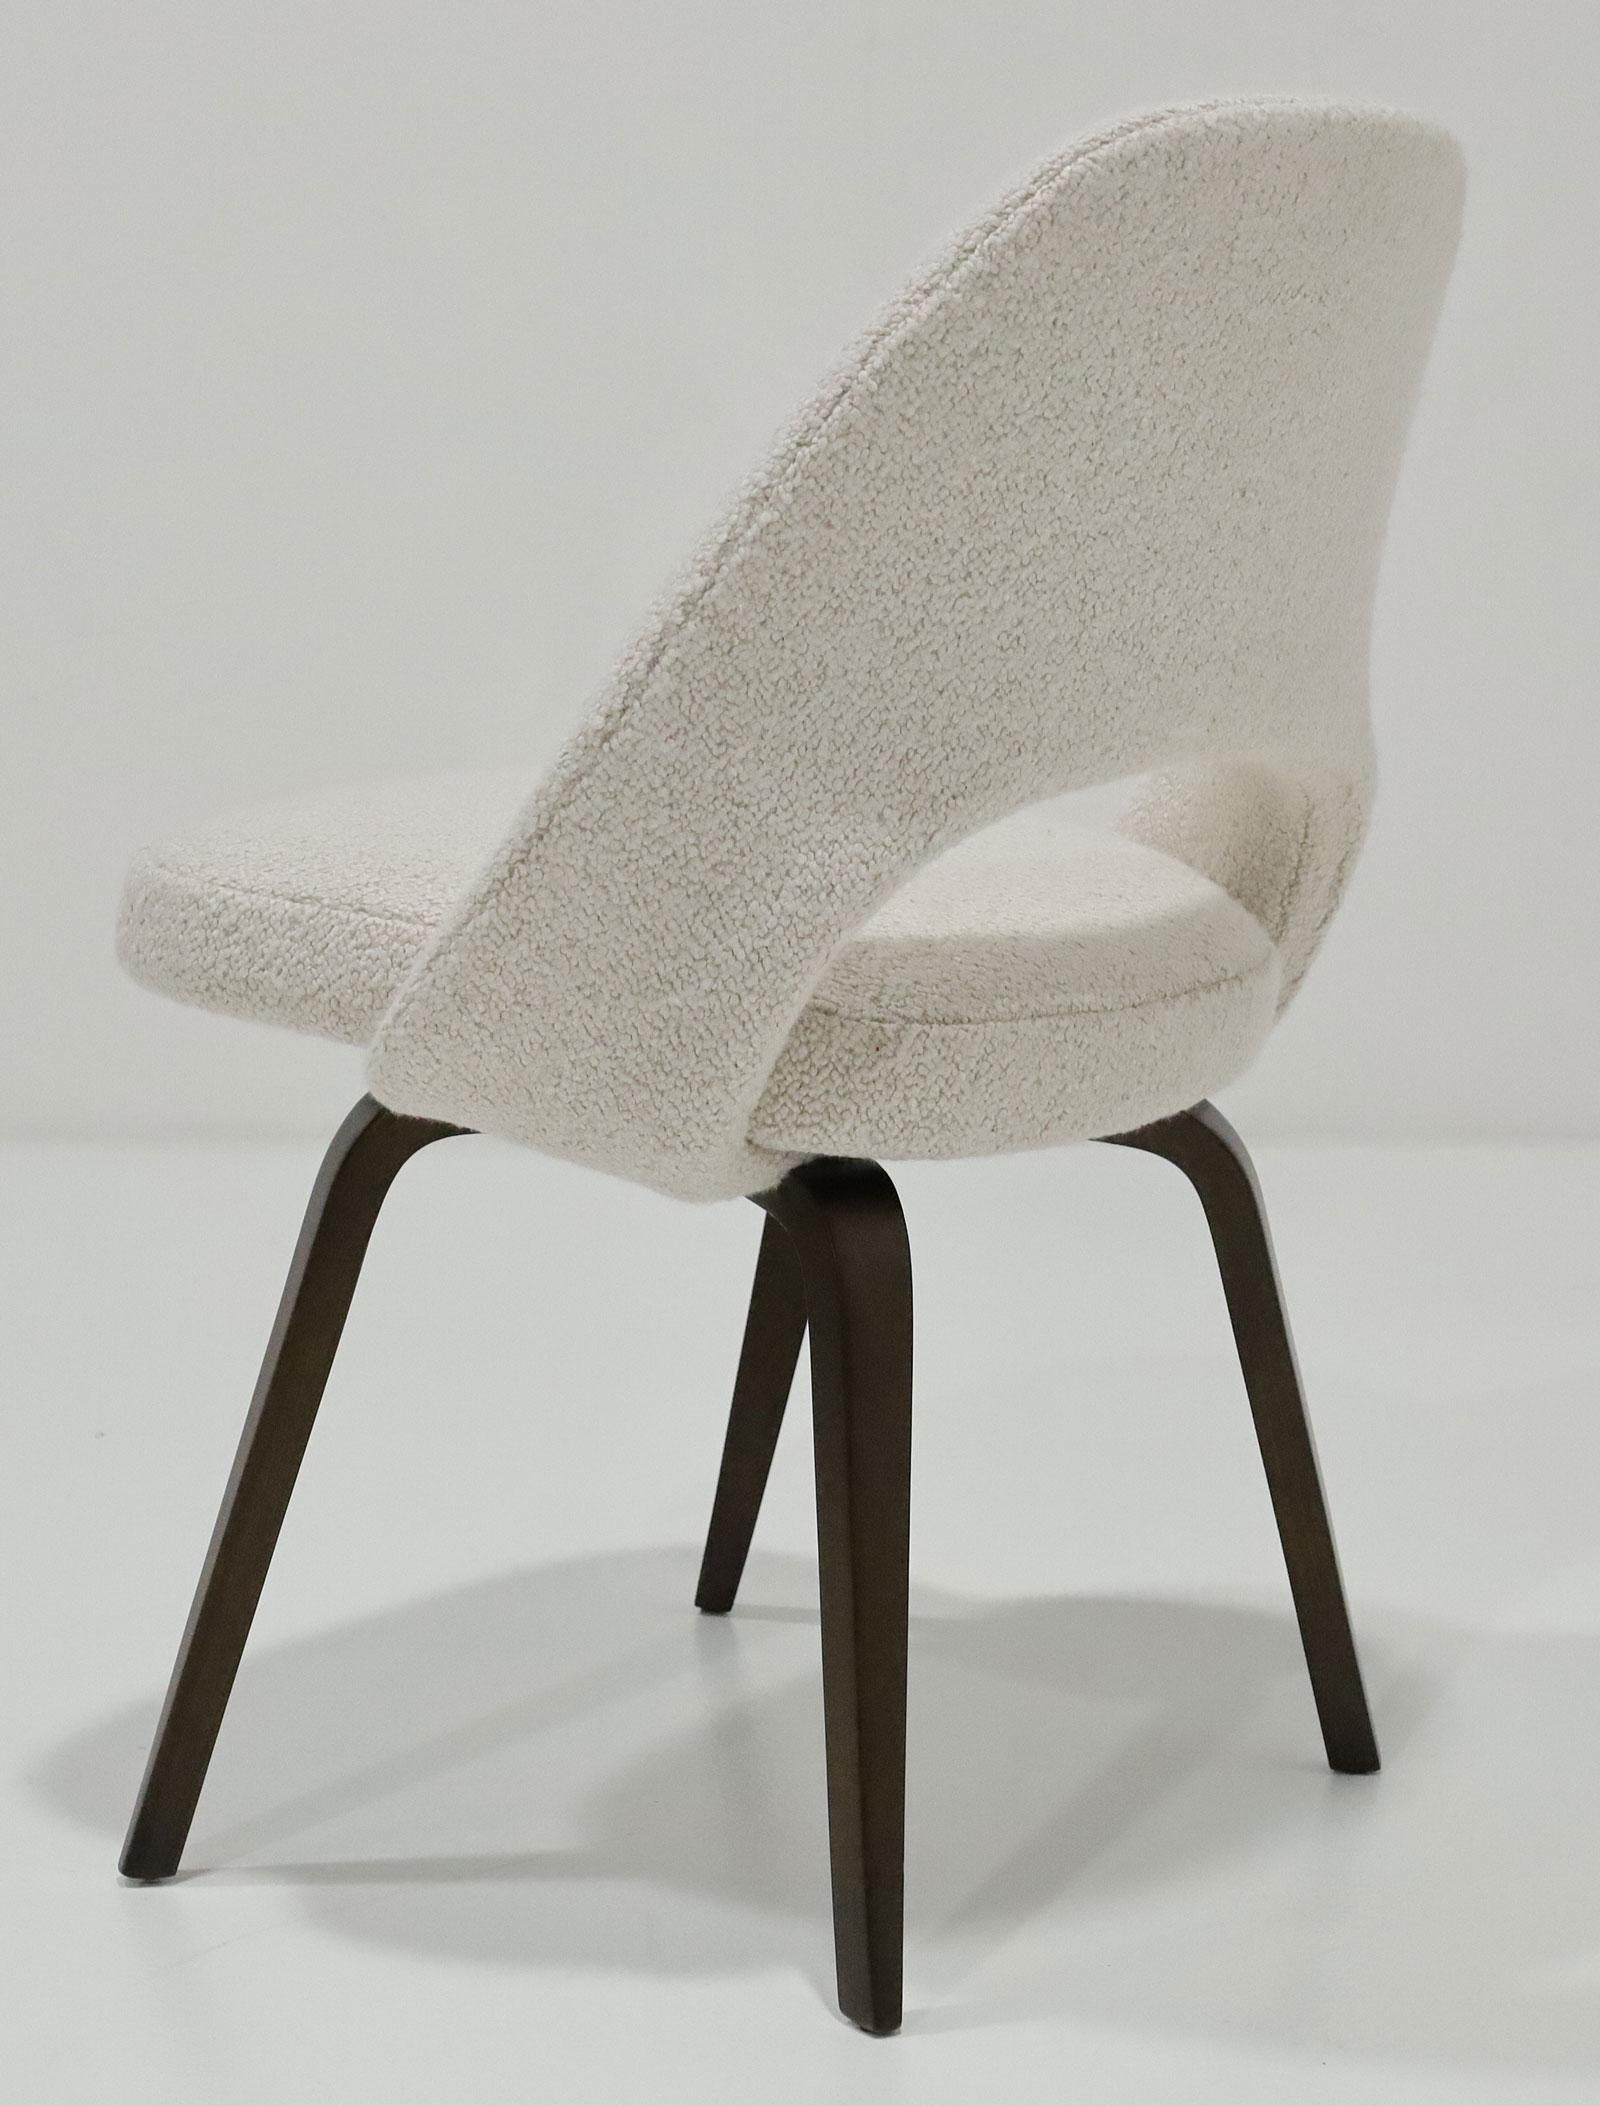 20th Century Eero Saarinen for Knoll Armless Executive Chair with Walnut Legs and Boucle